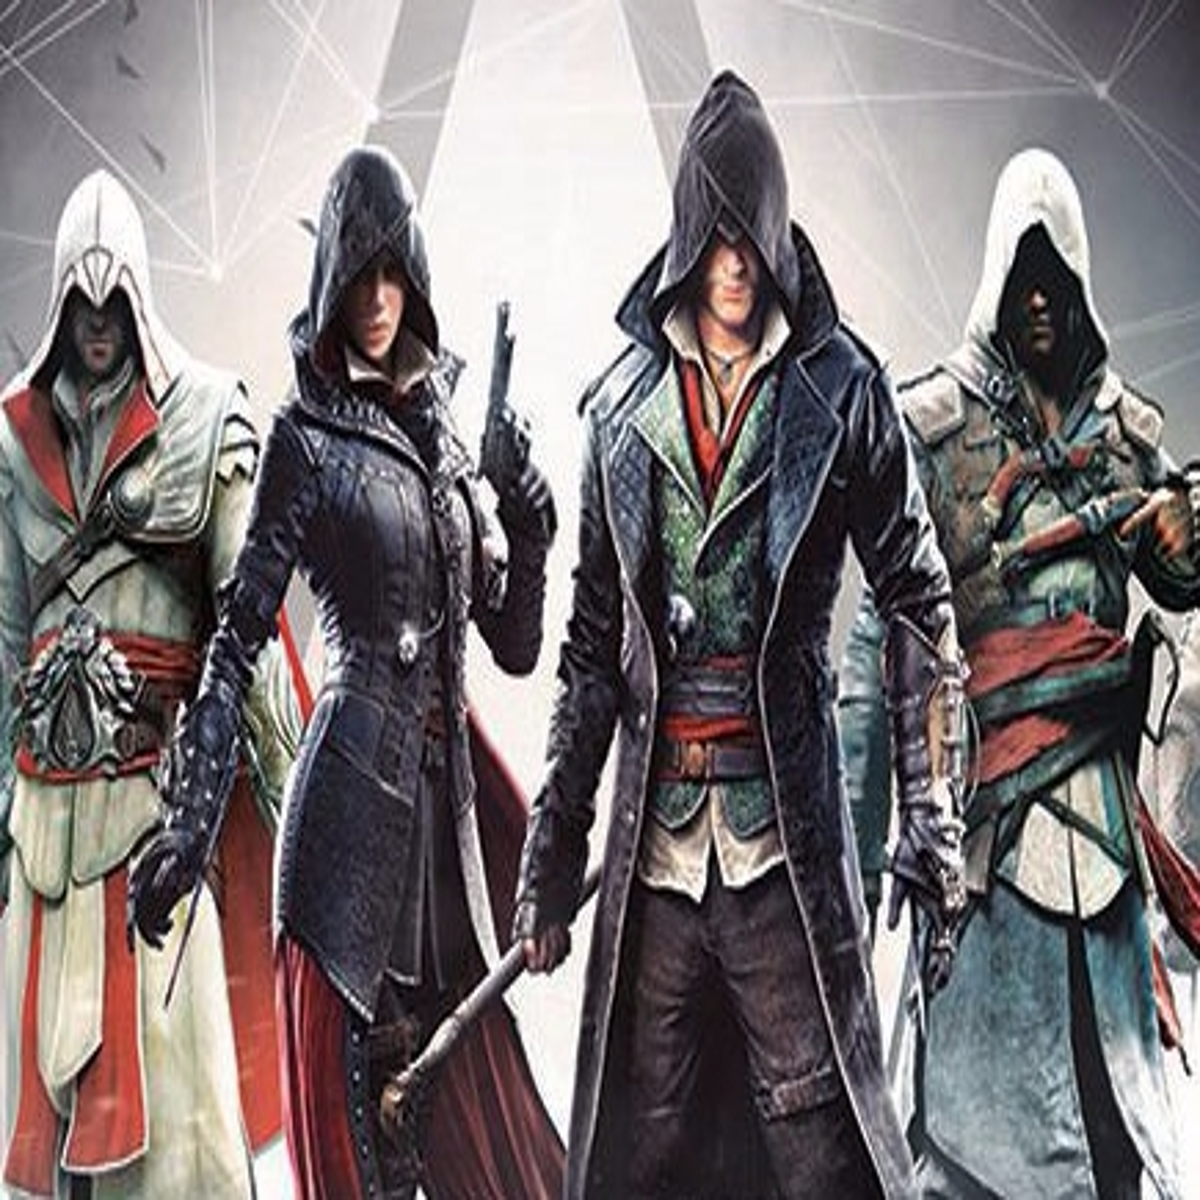 Assassins Creed Unity Elise & Arno  Assassin's creed, Assassins creed  game, Assasins creed